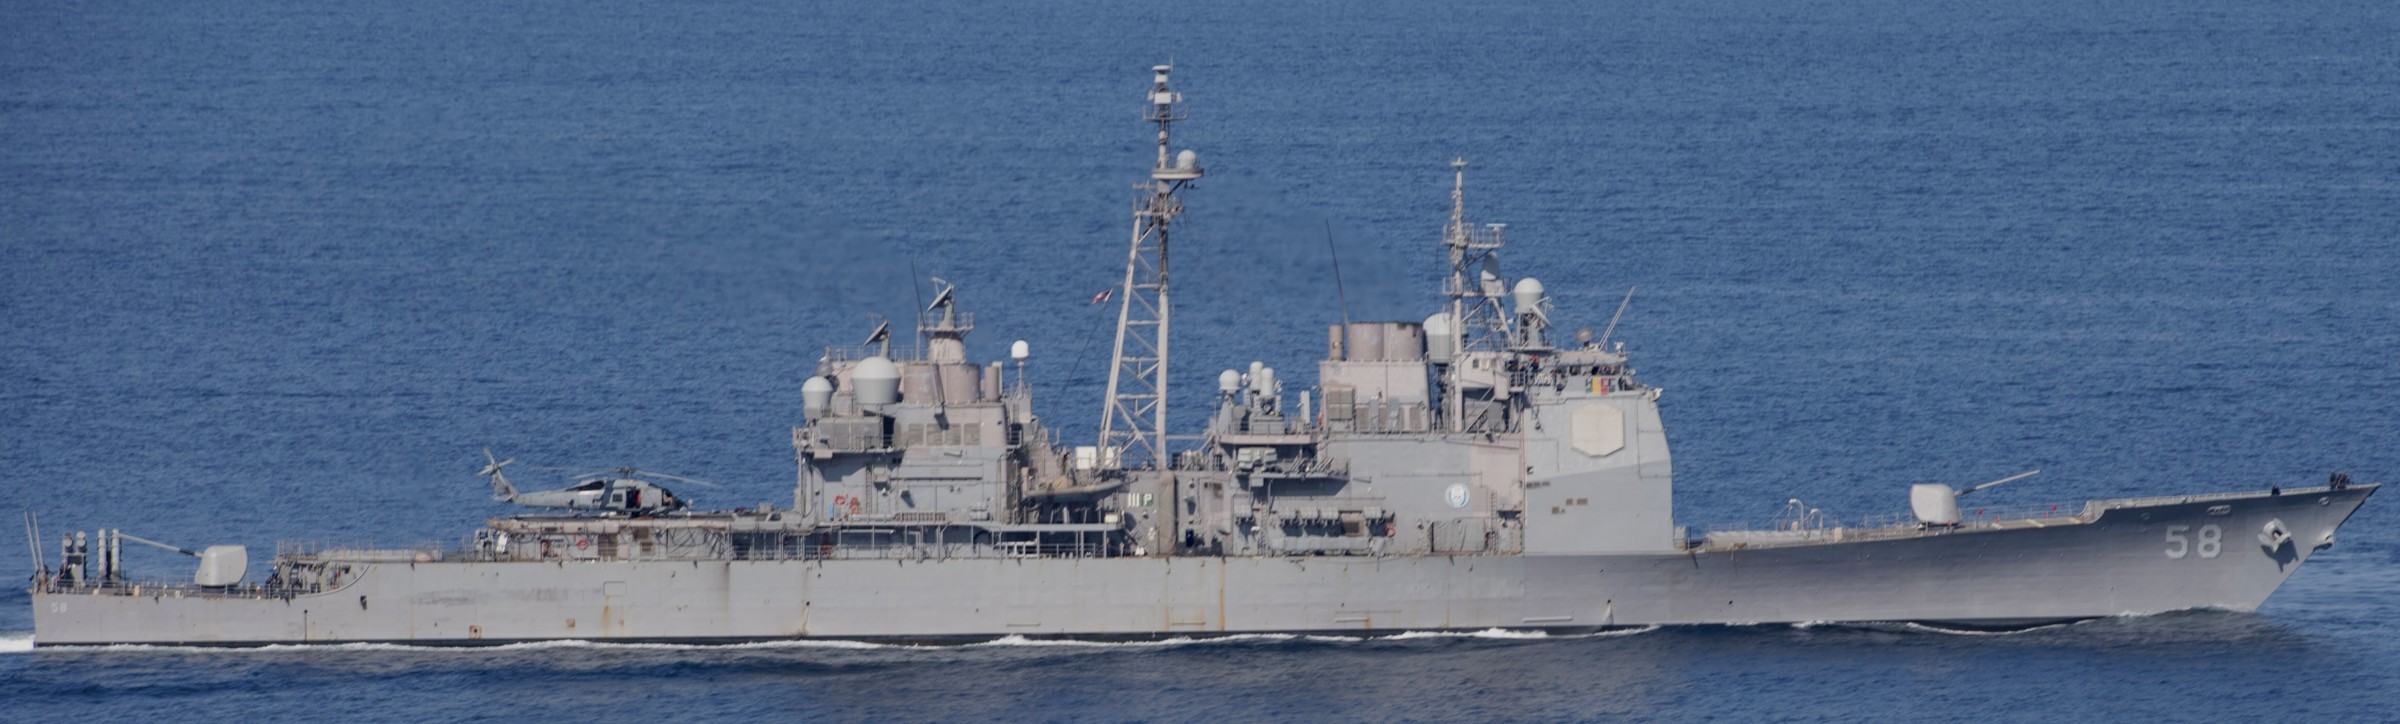 cg-58 uss philippine sea ticonderoga class guided missile cruiser aegis us navy strait of hormuz 64